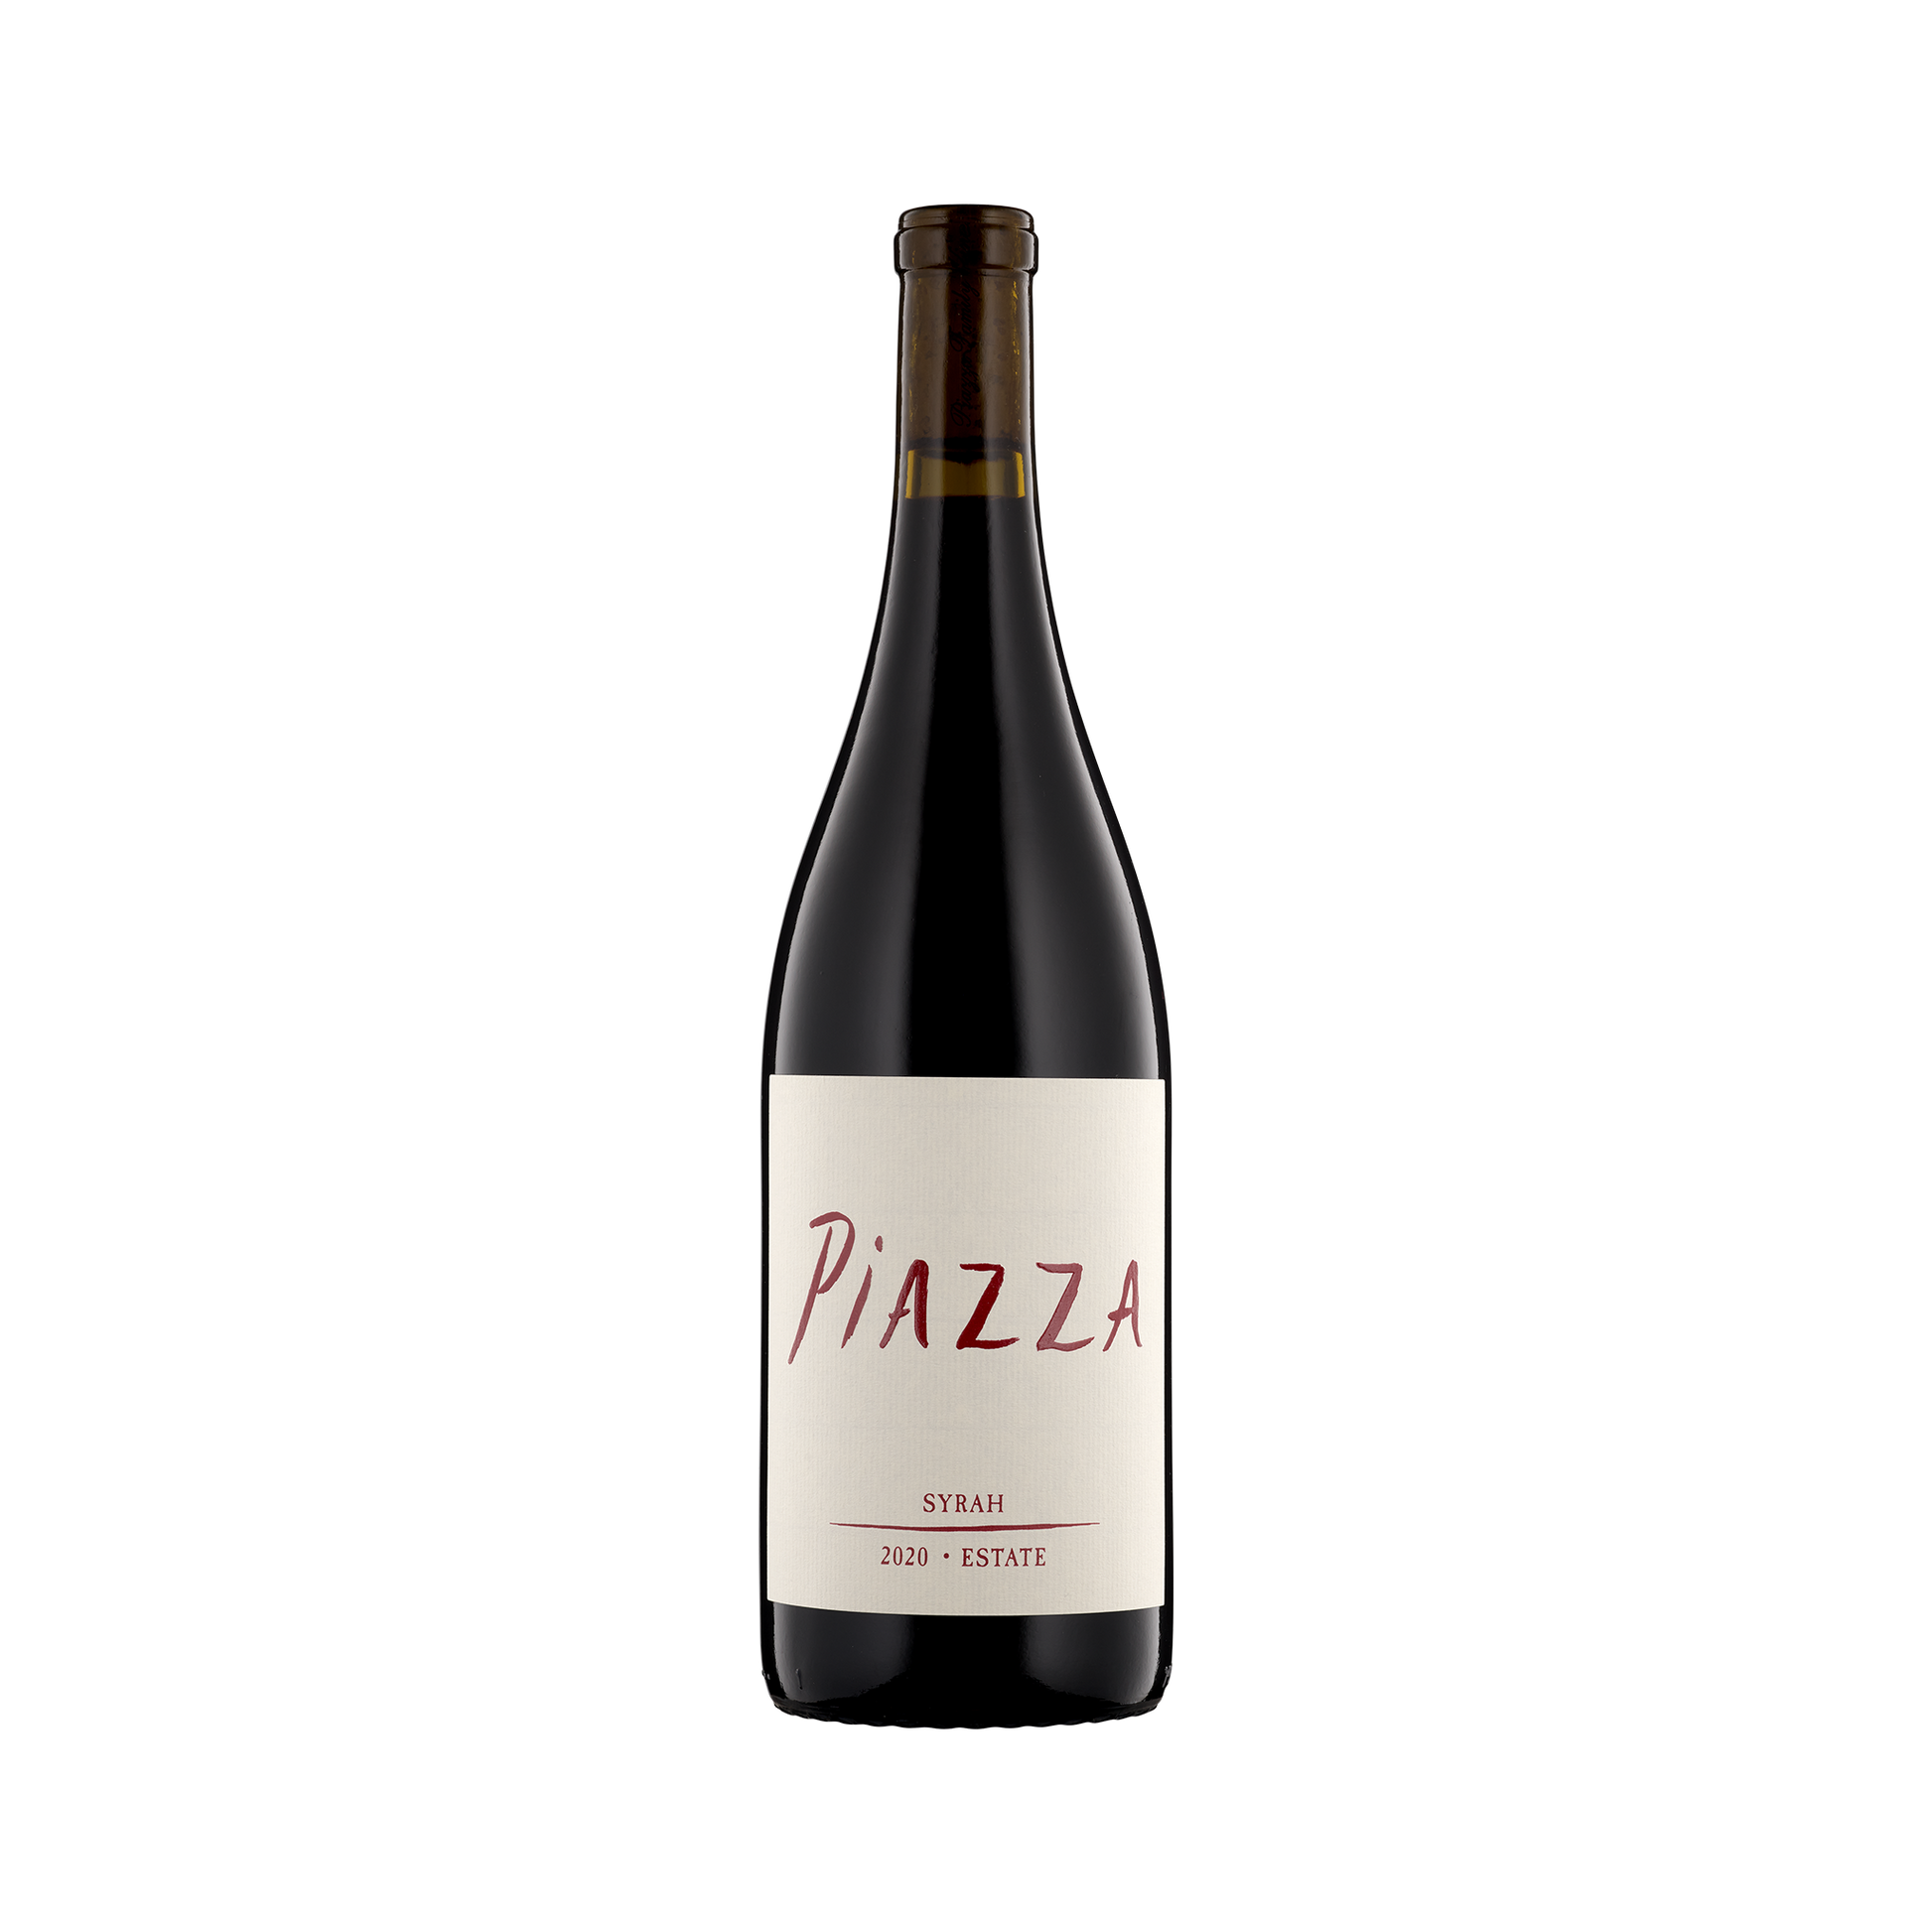 A bottle of Piazza Estate 2020 Syrah Bella Vista Vineyard